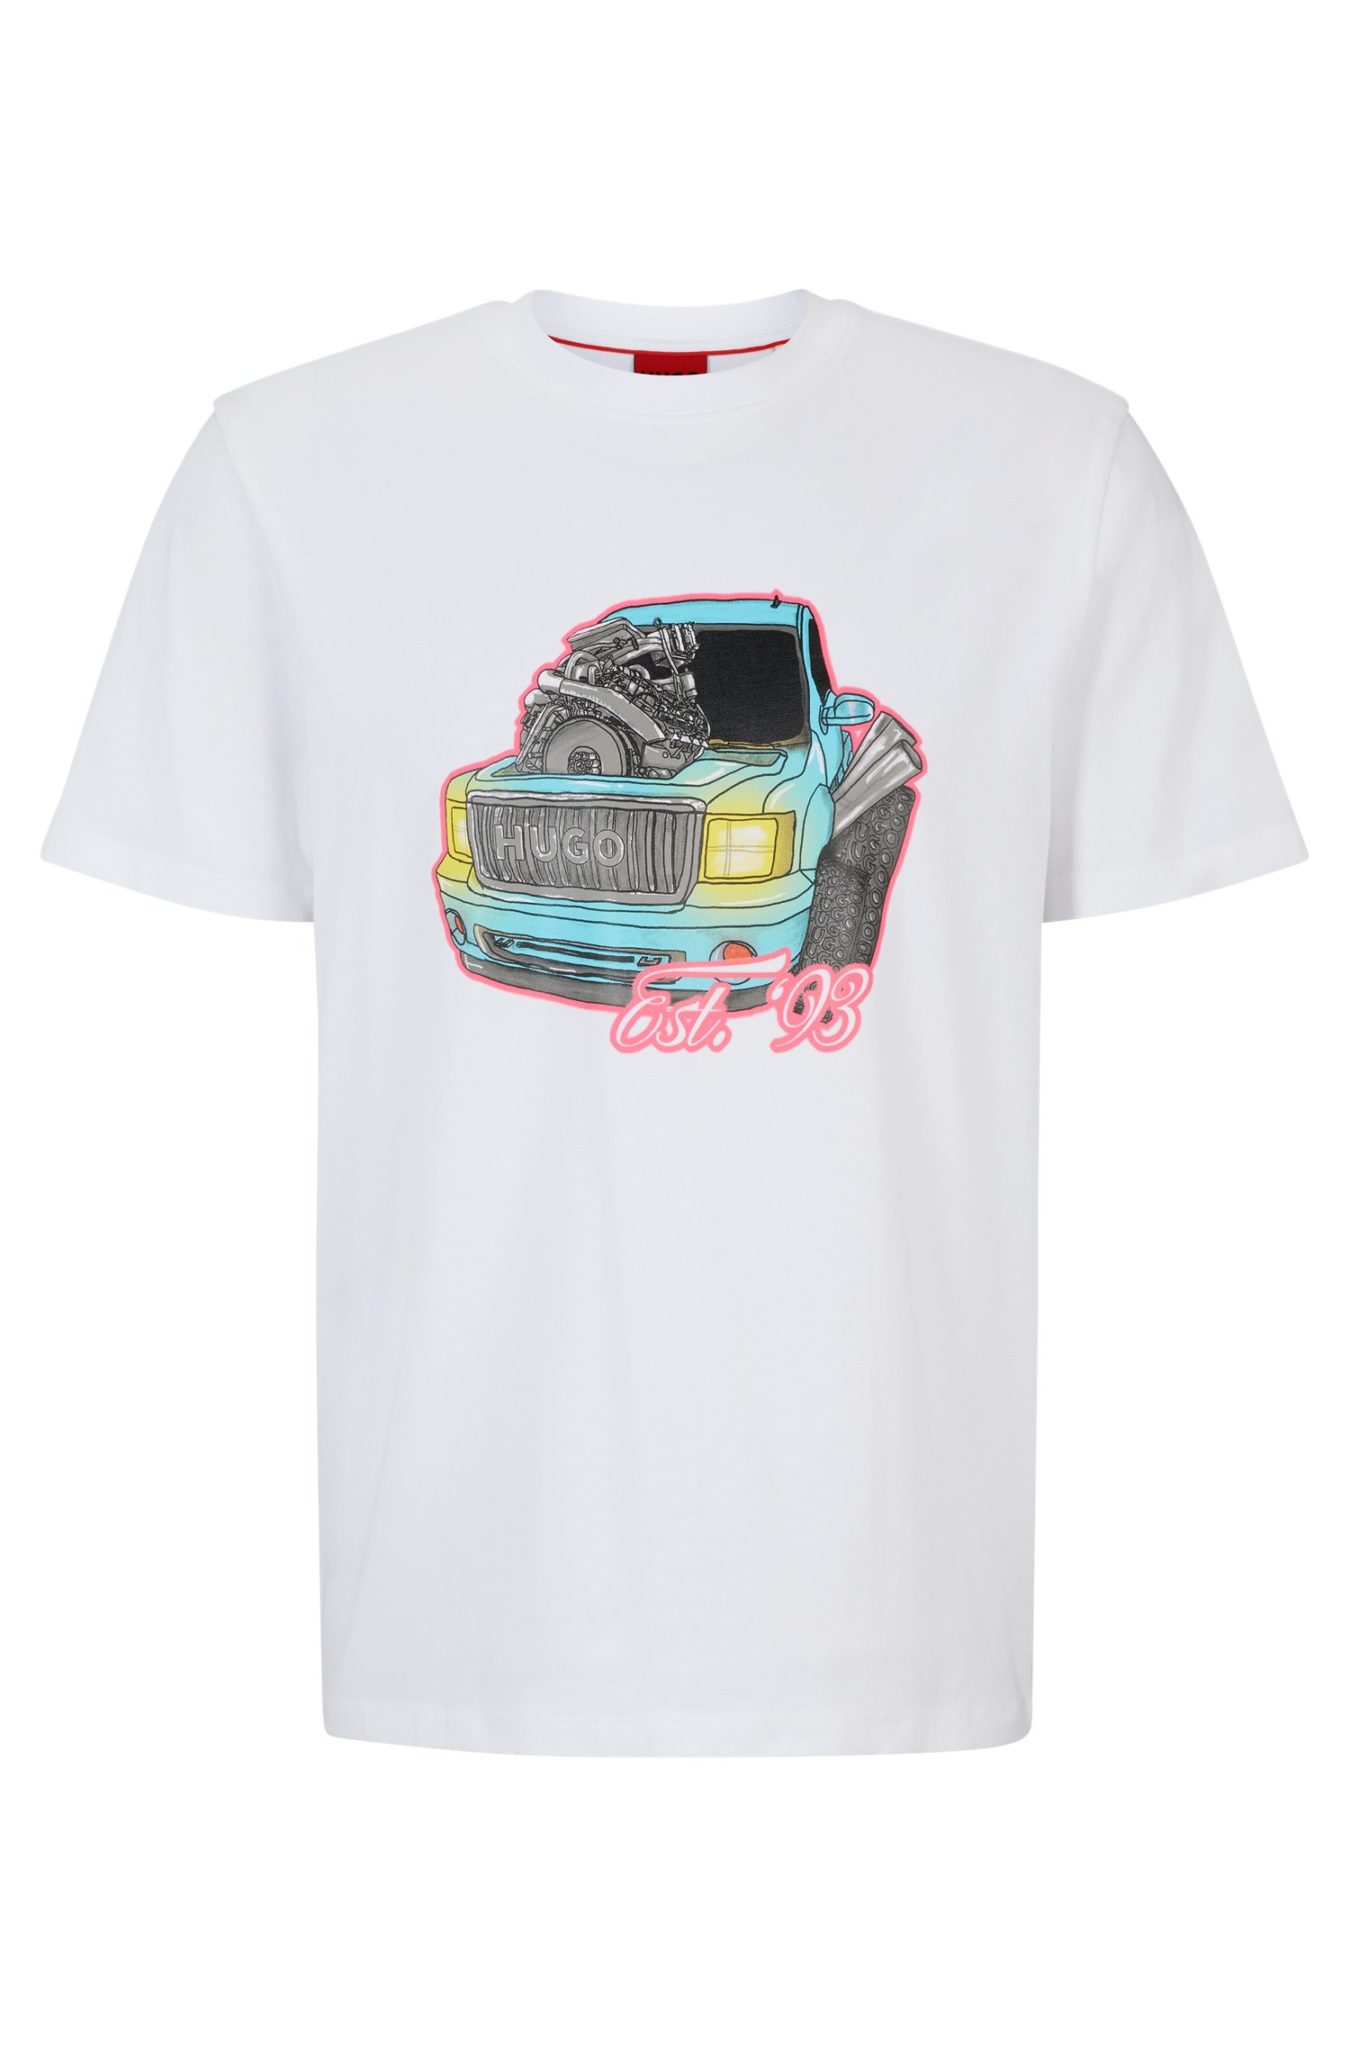 Hugo Boss T-shirt Relaxed en coton à motif artistique voiture